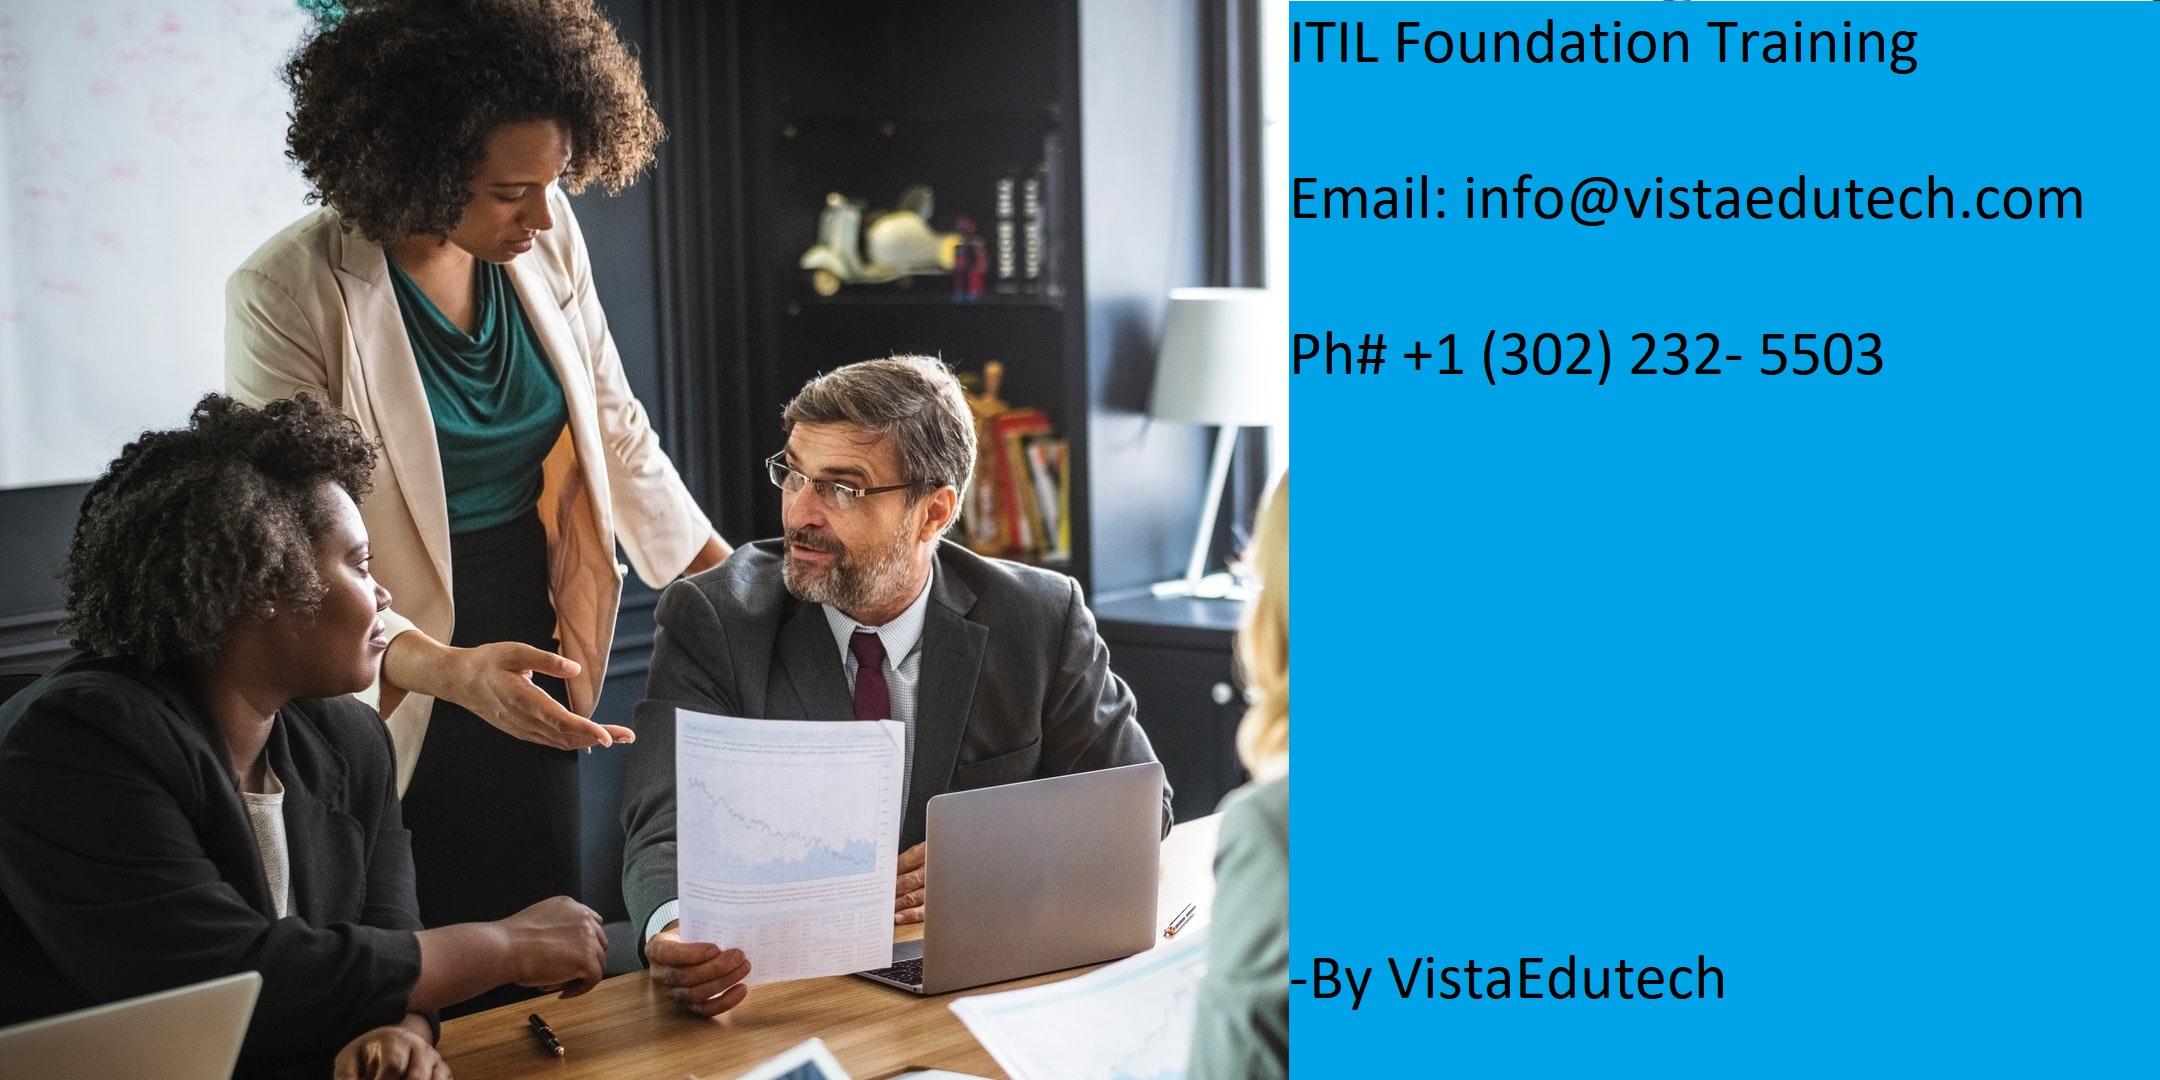 ITIL Foundation Certification Training in Santa Fe, NM